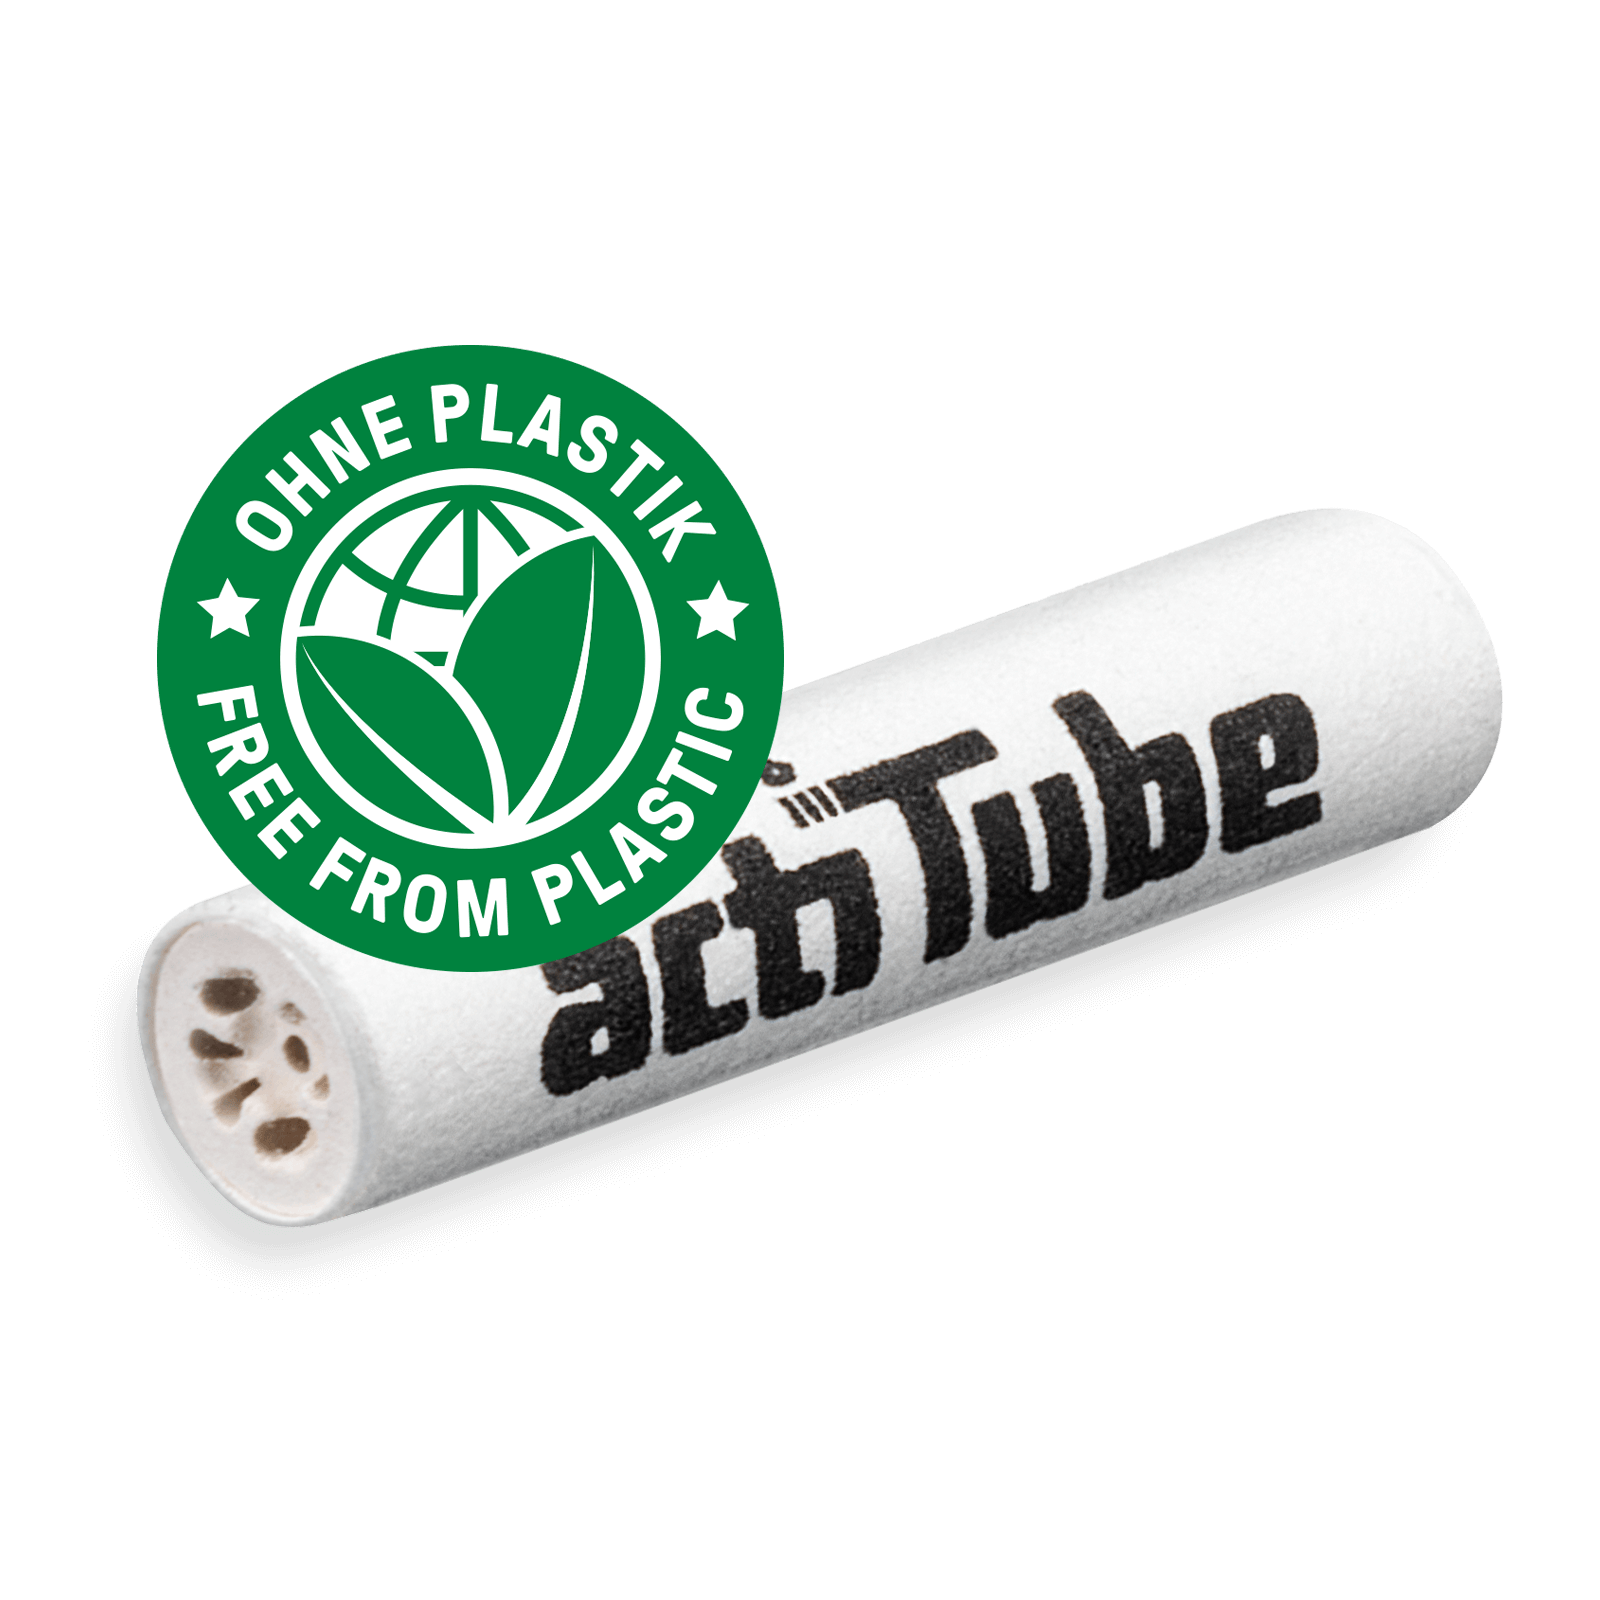 ACTITUBE – EXTRA SLIM _ FULL FLAVOR – Filtri Carboni Attivi (Ø6 mm) –  Veganja Shop